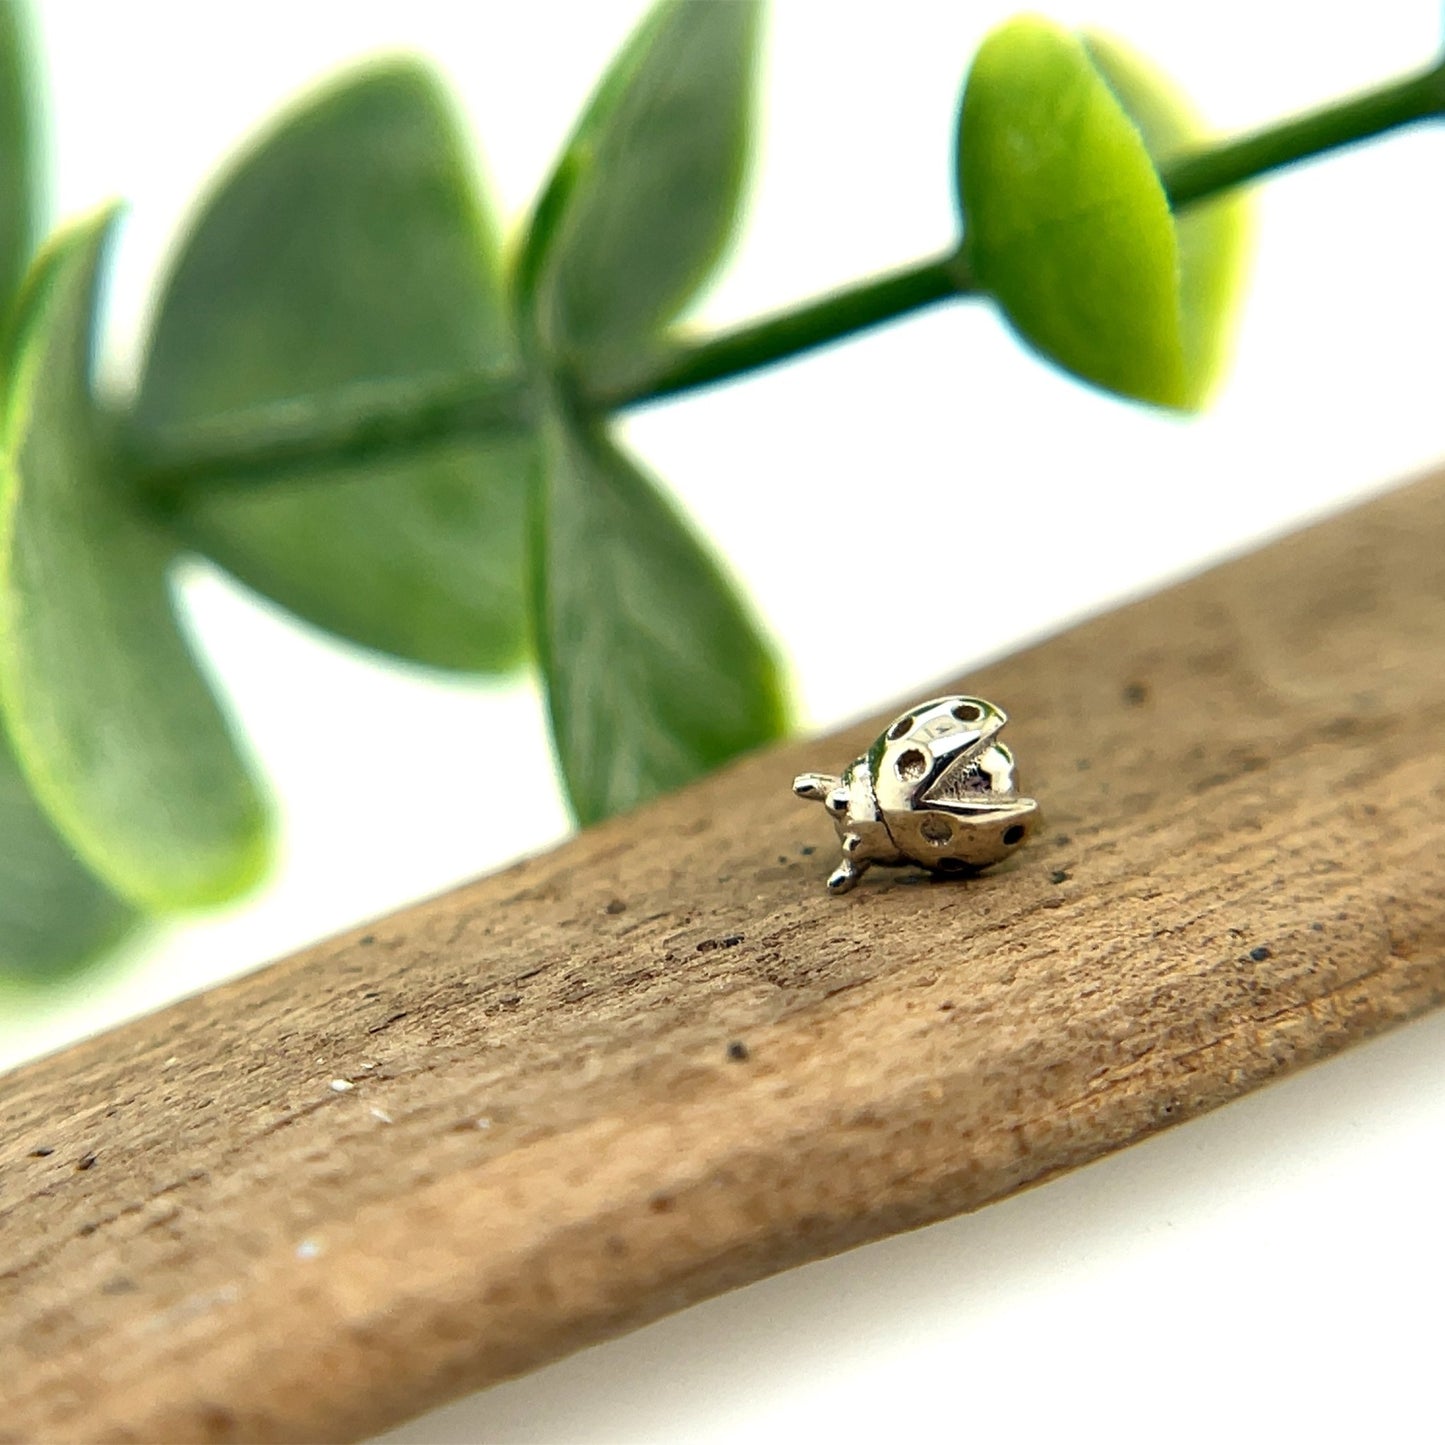 Ladybug - Agave in Bloom